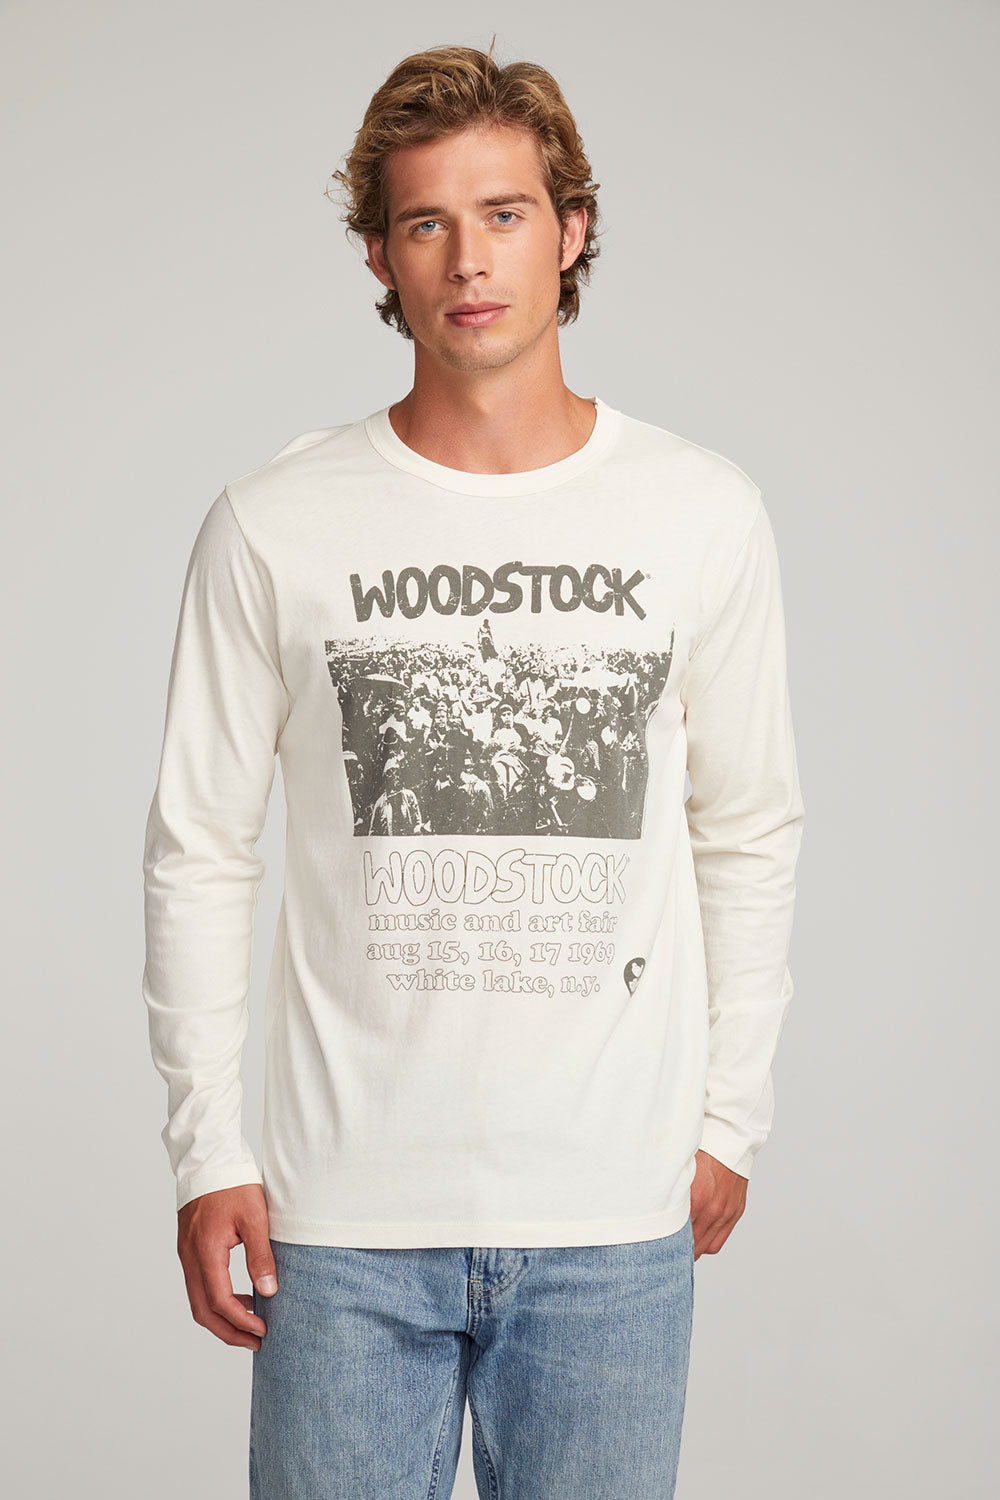 Woodstock Retro Poster Mens Long Sleeve MENS chaserbrand